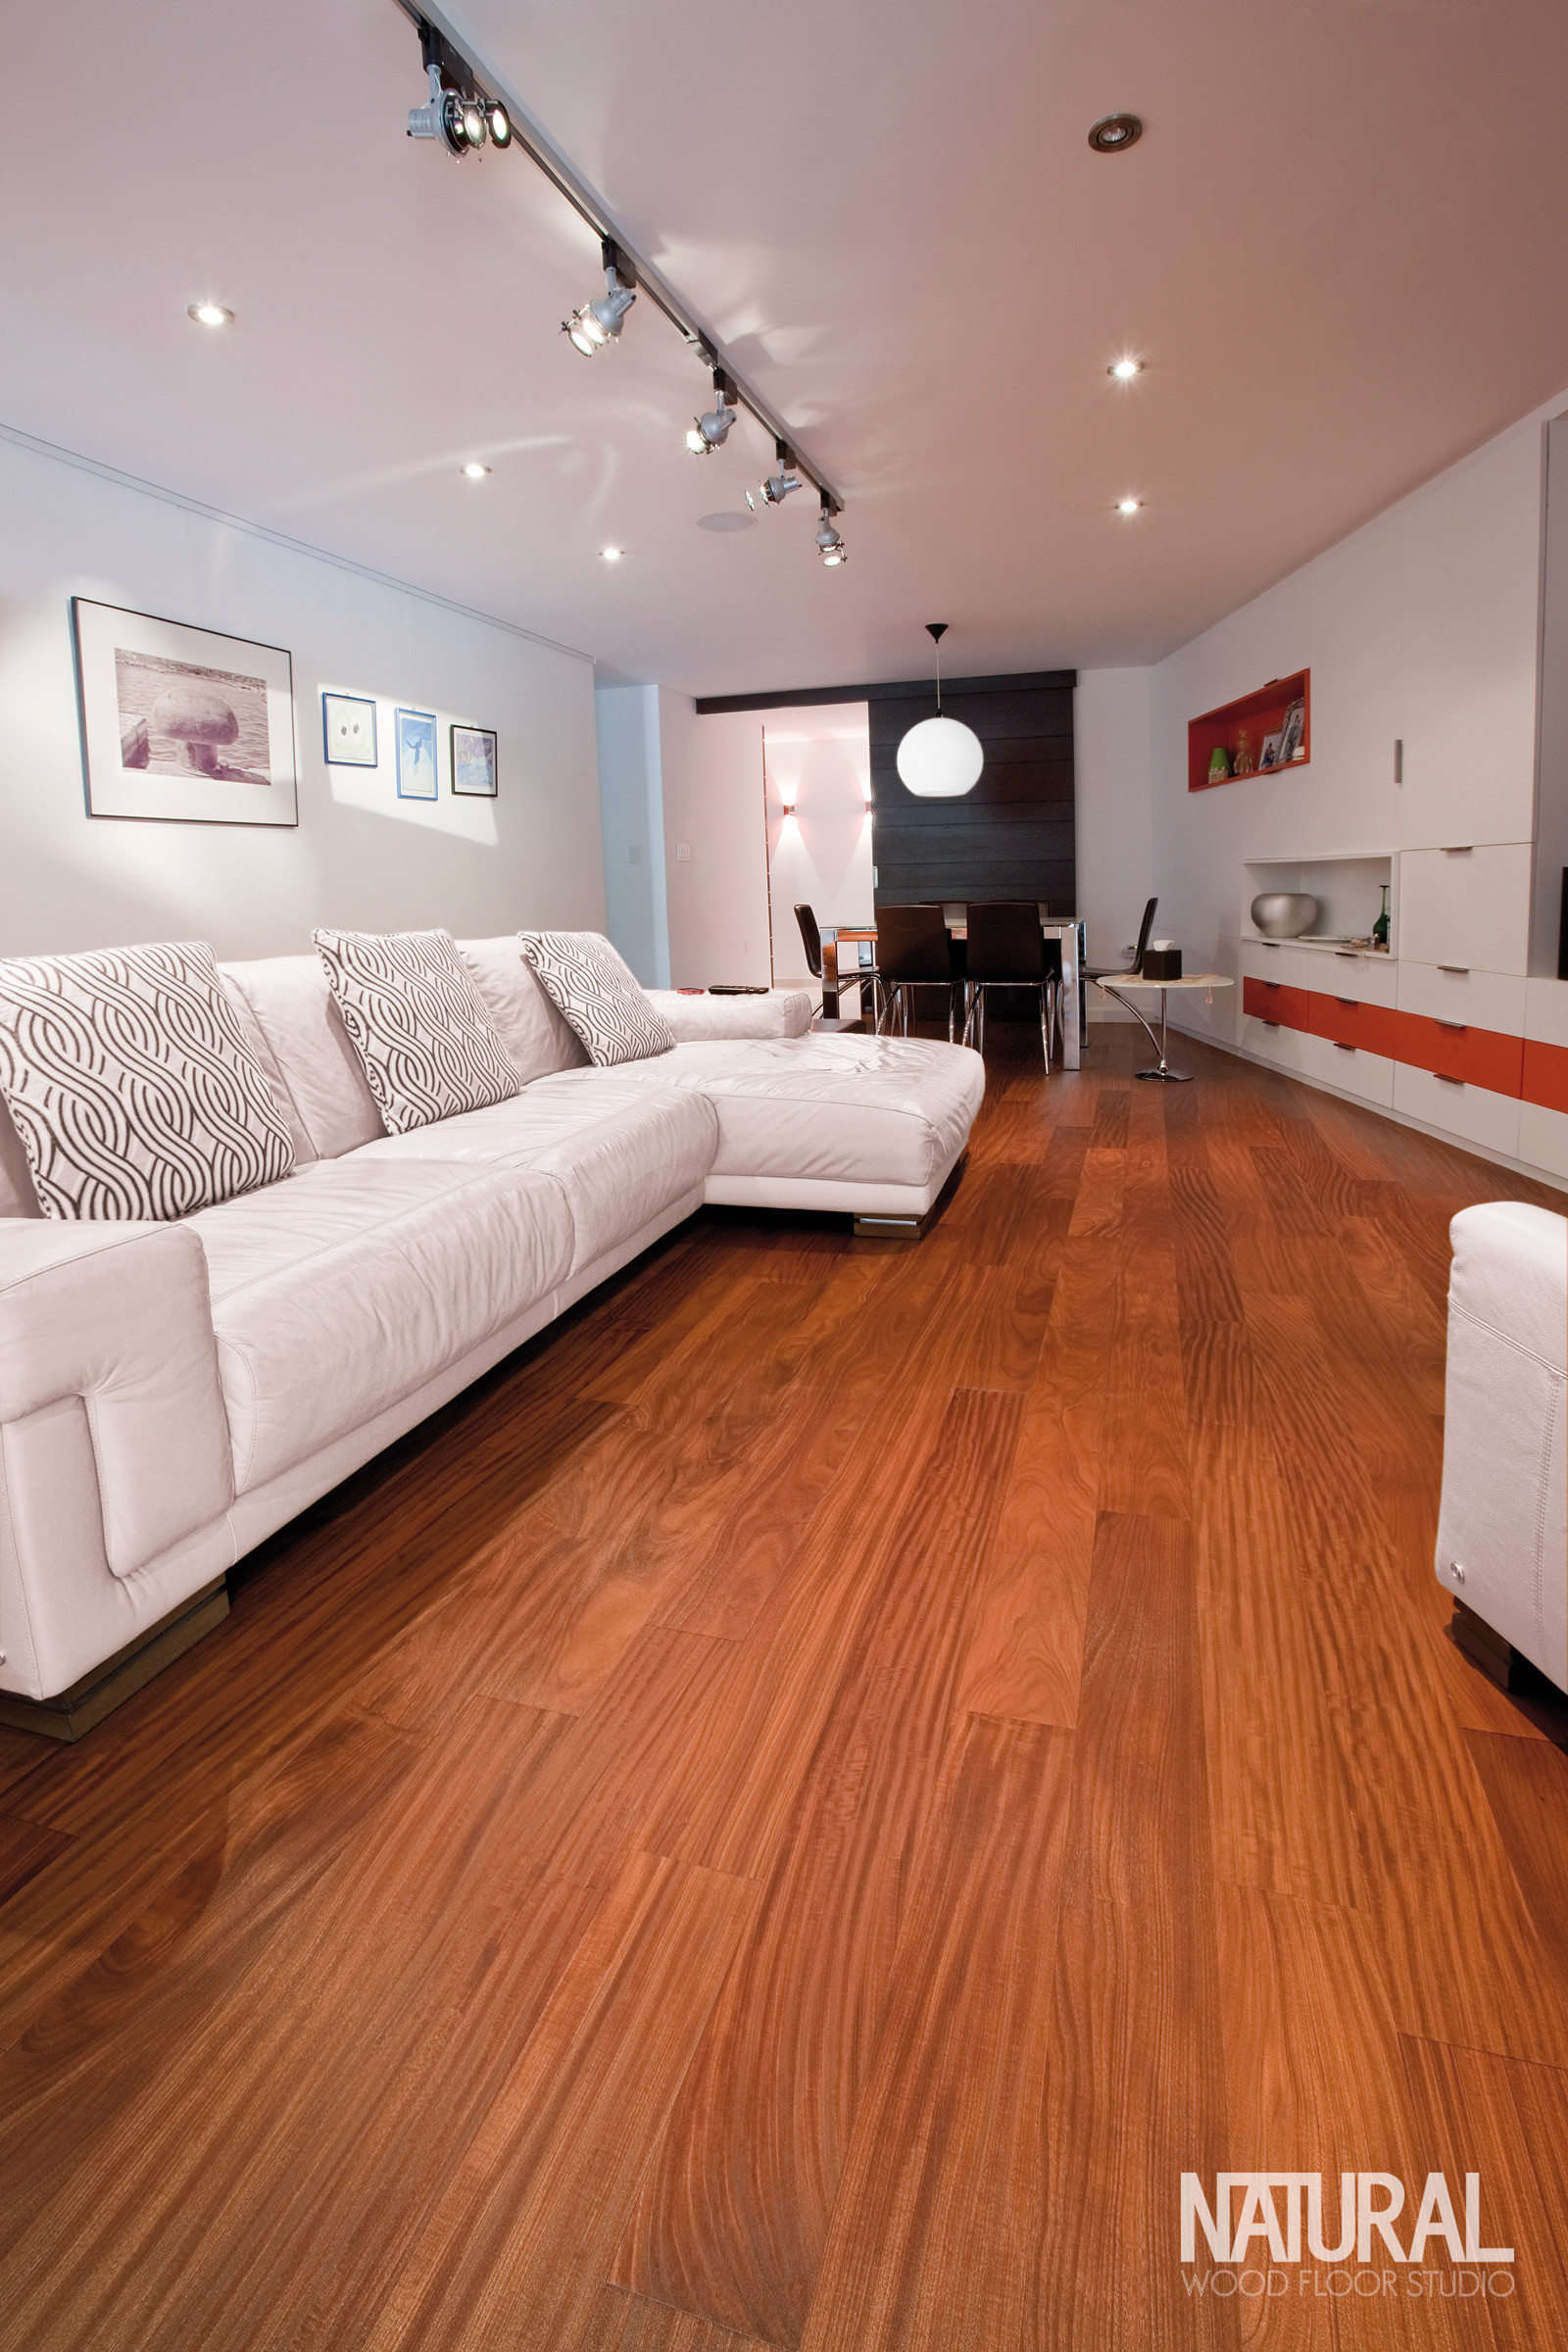 11 Trendy wholesale Hardwood Flooring Suppliers 2022 free download wholesale hardwood flooring suppliers of natural wood floor studio the fine art of wood floors throughout design